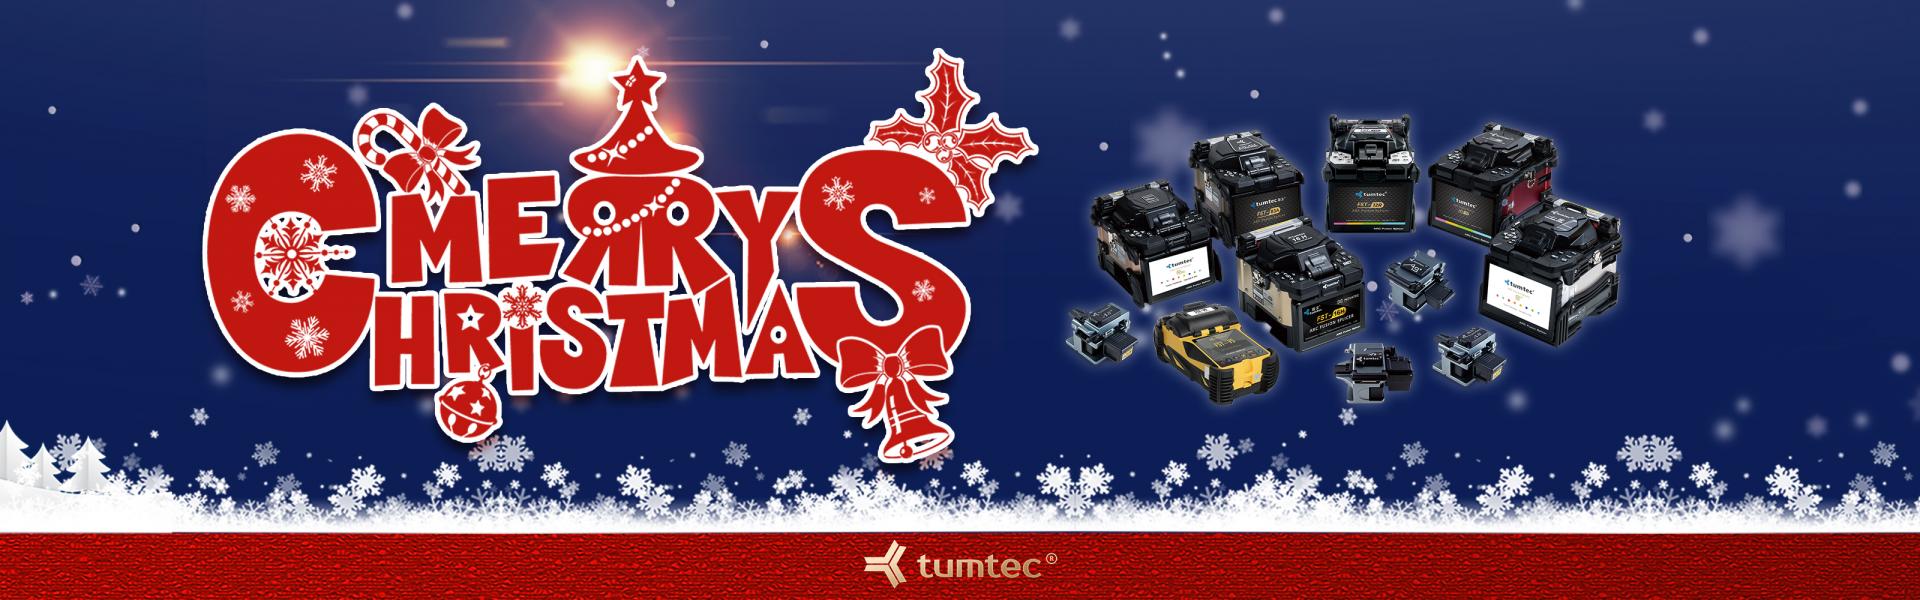 Tumtec team wish all our overseas customer a merry christmas